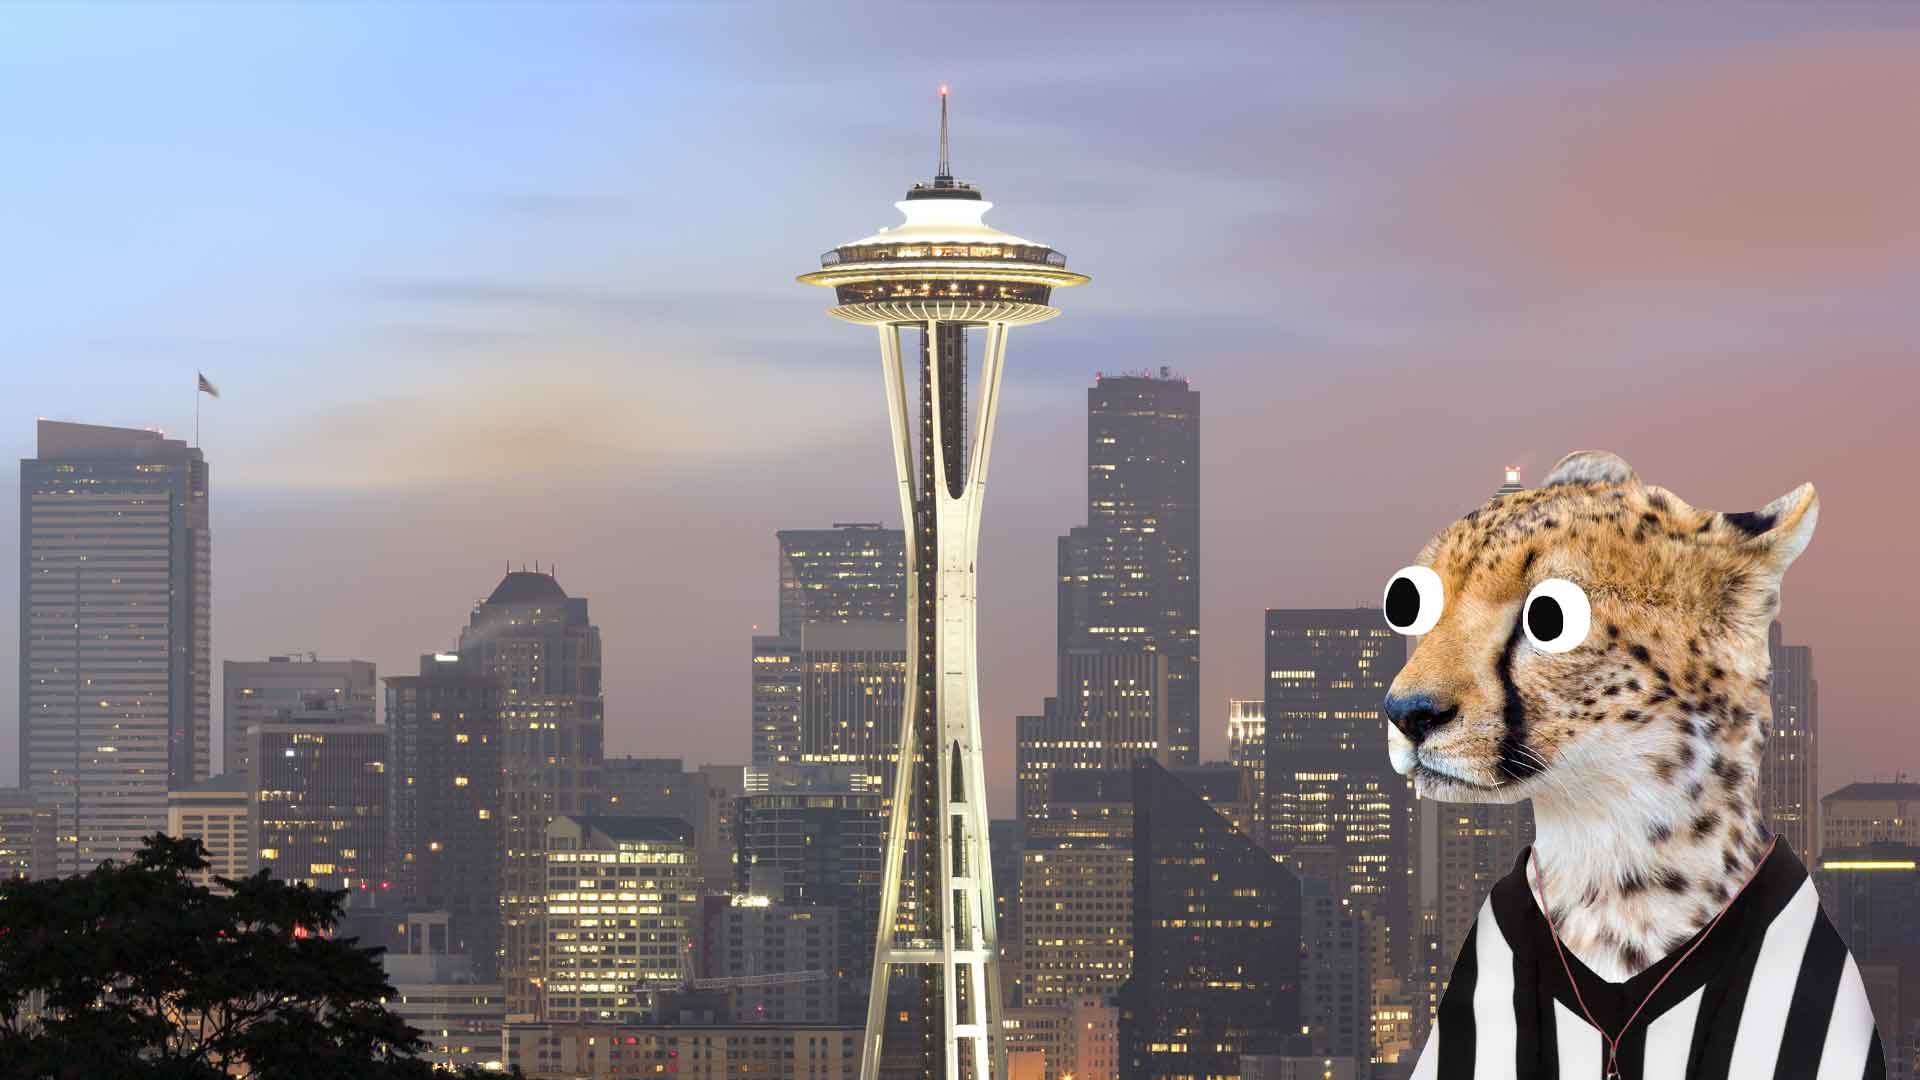 A famous Seattle landmark